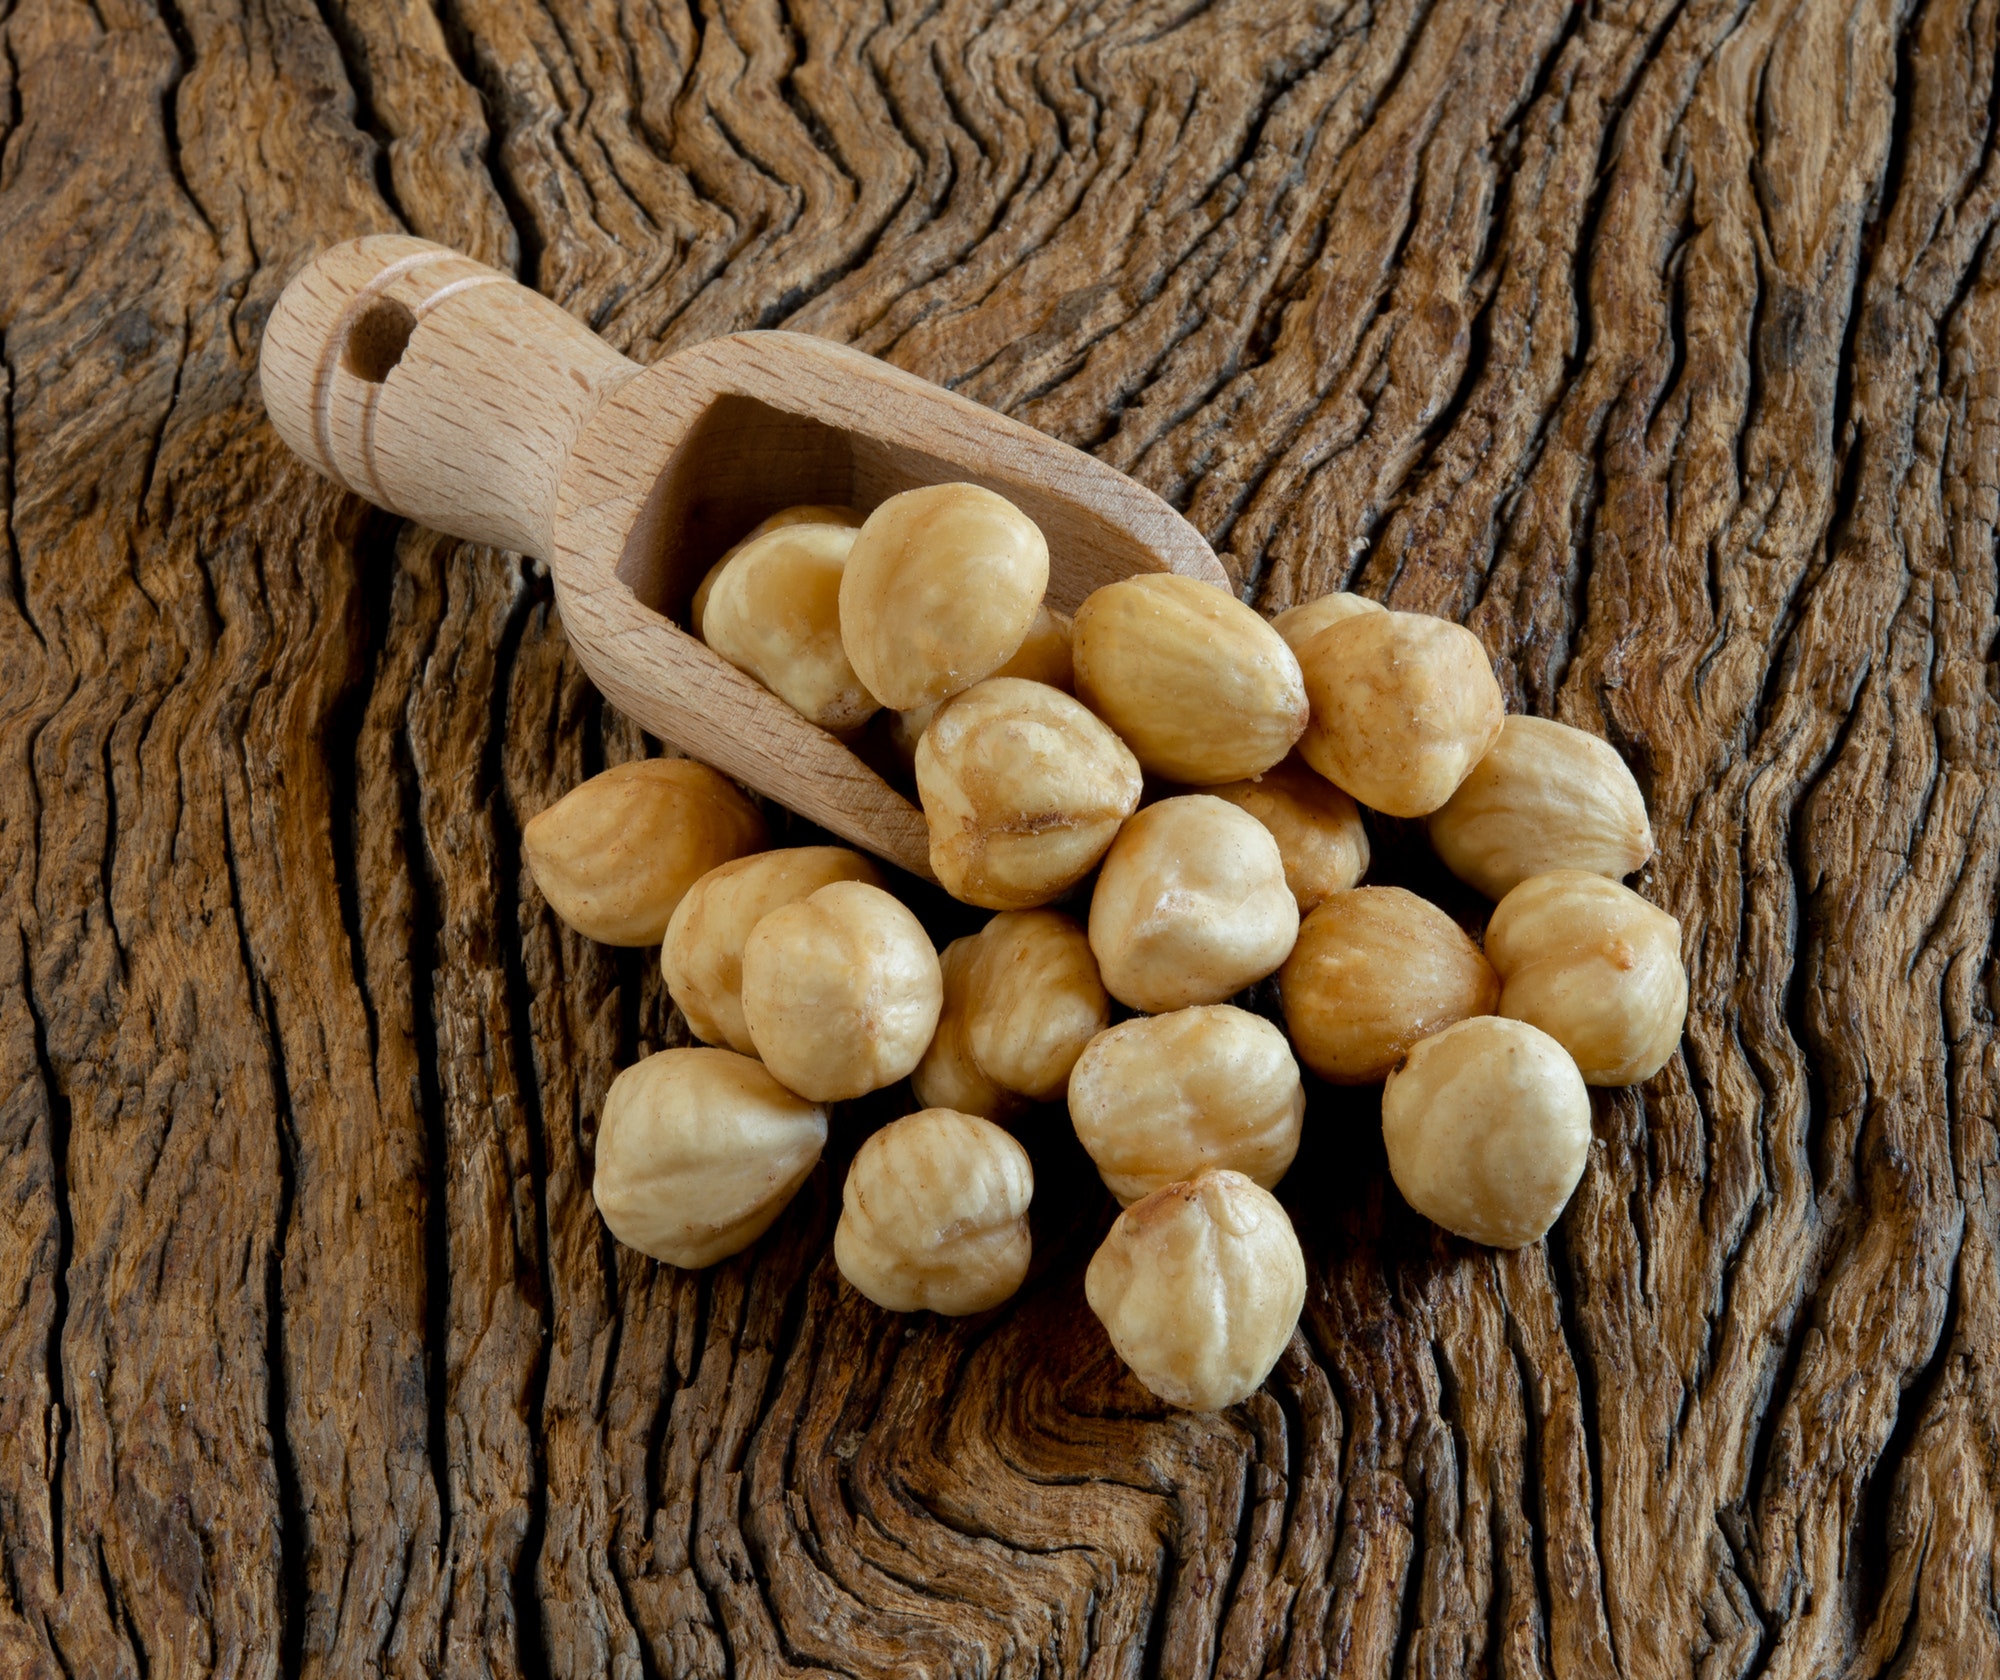 peeled hazelnuts typical of Avellino Italian city